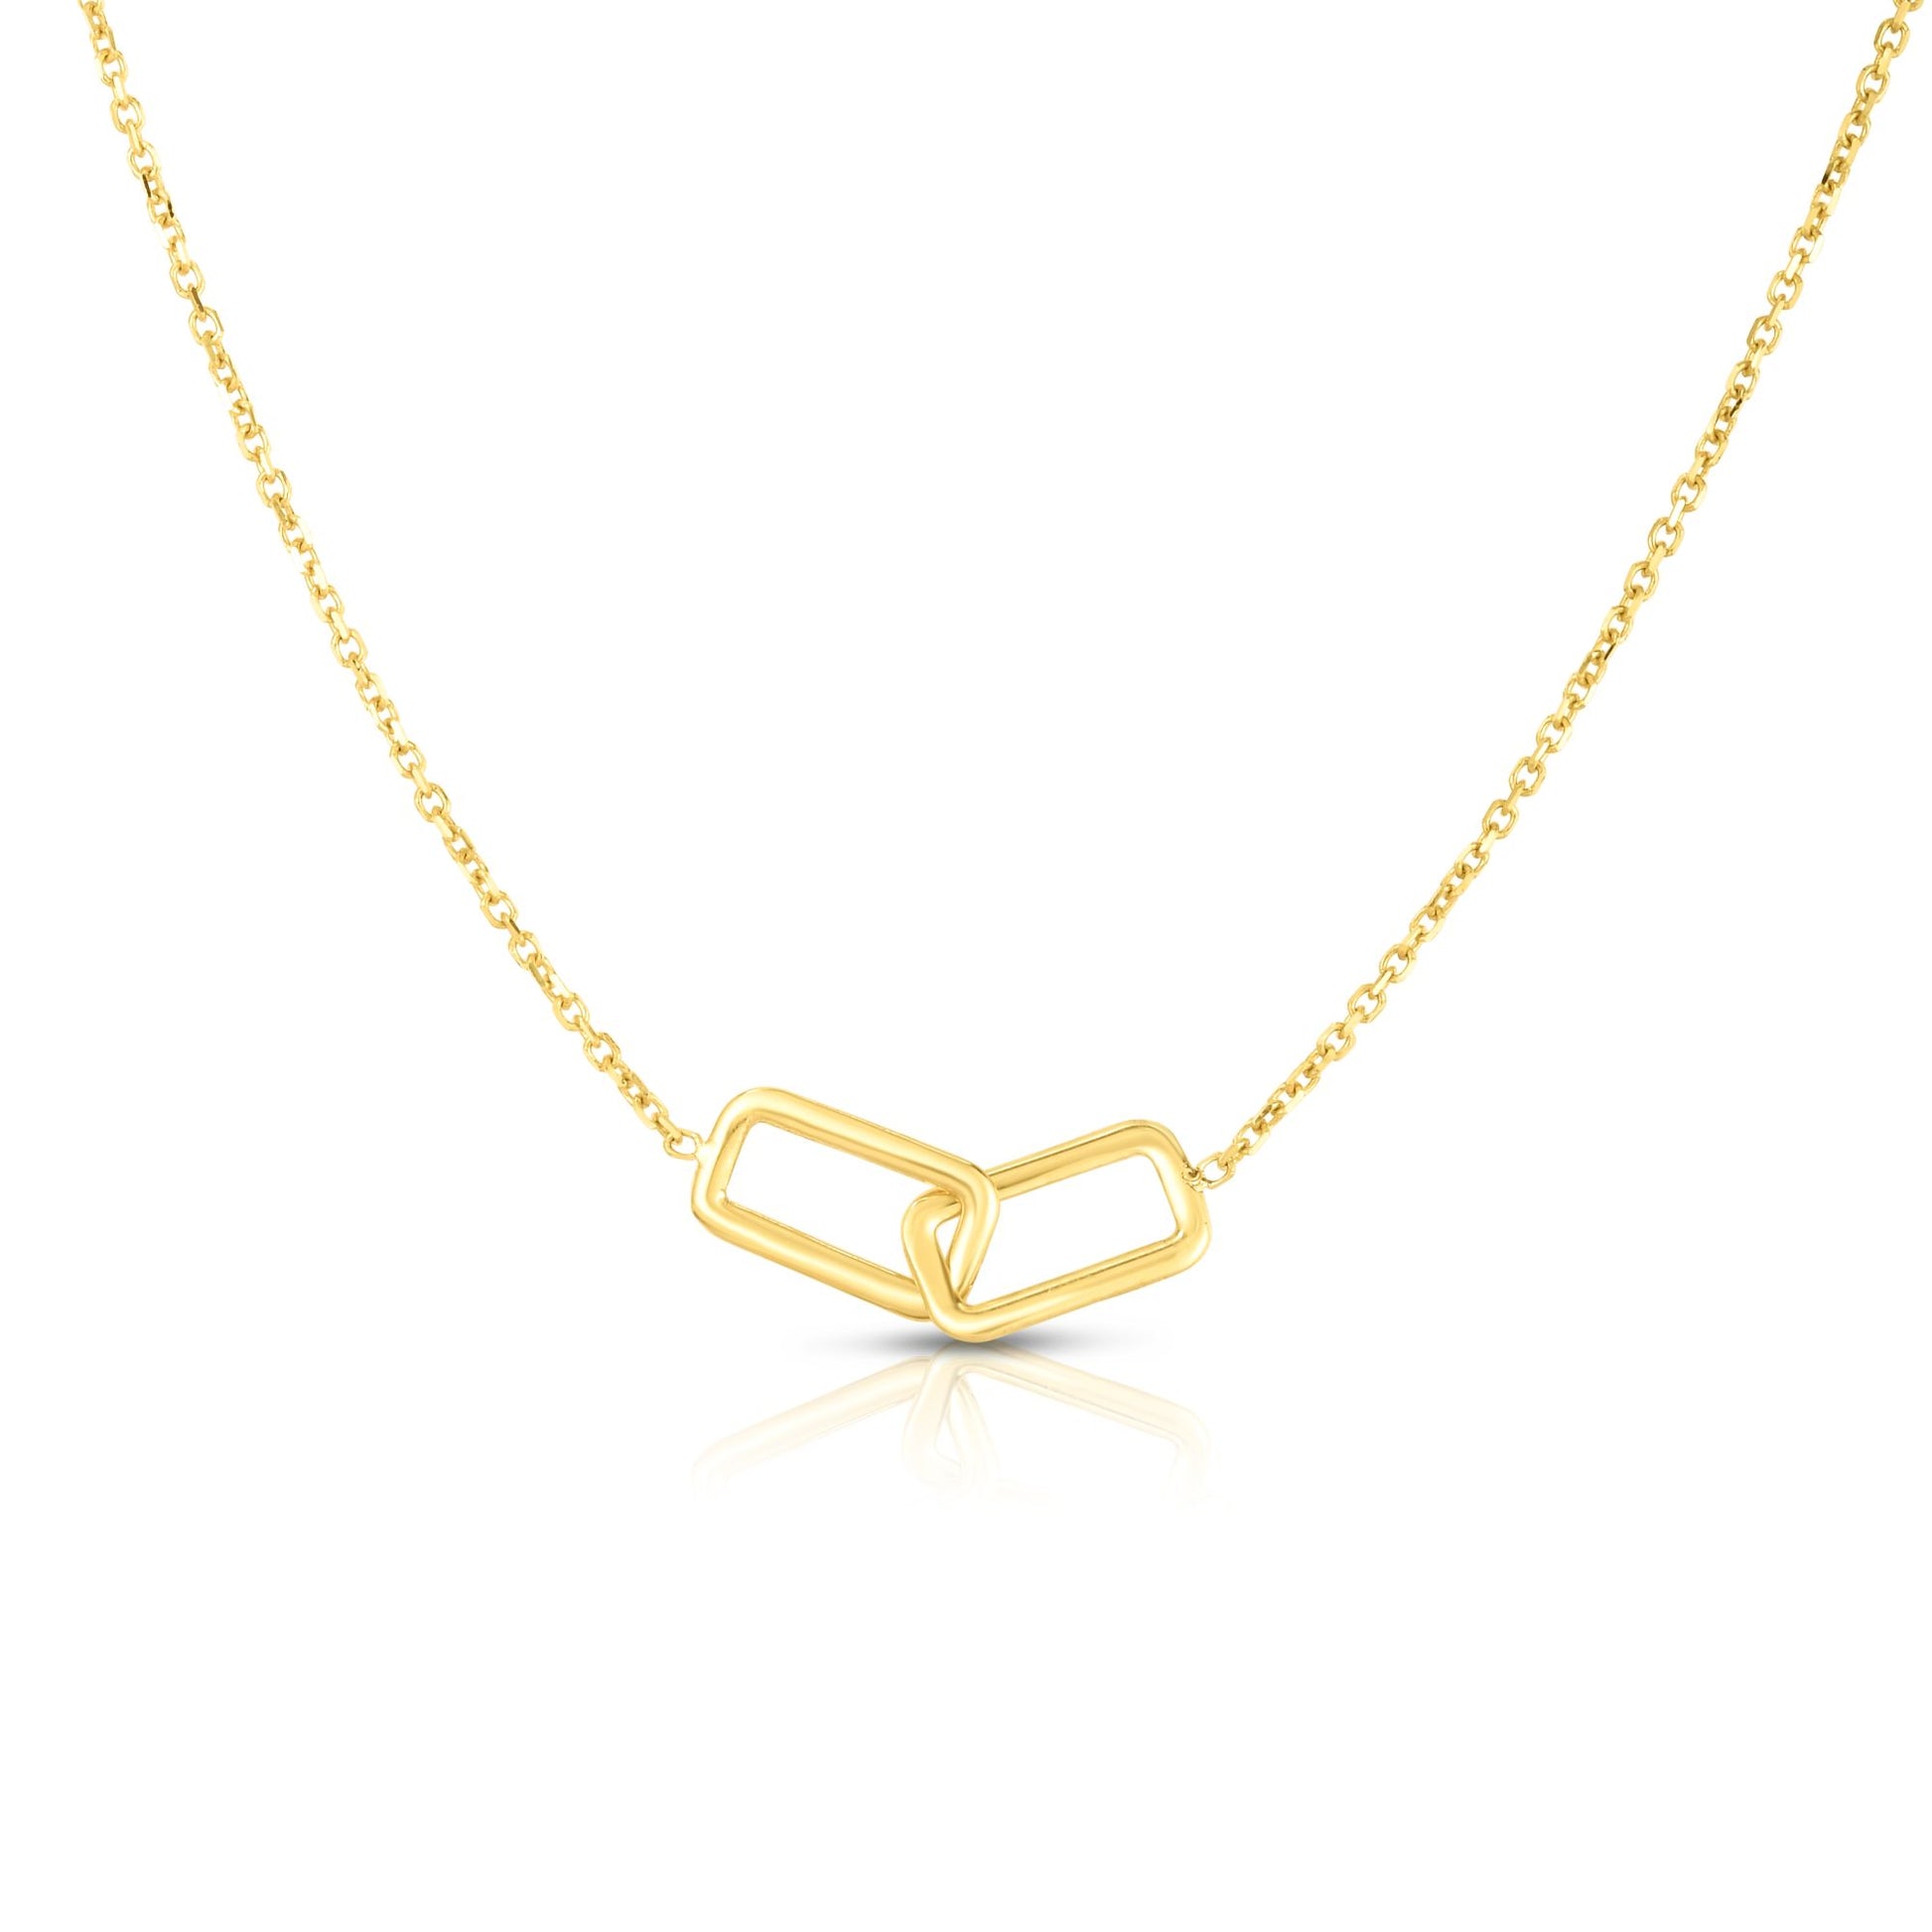 14K Gold Polished Interlocking Rectangles Necklace